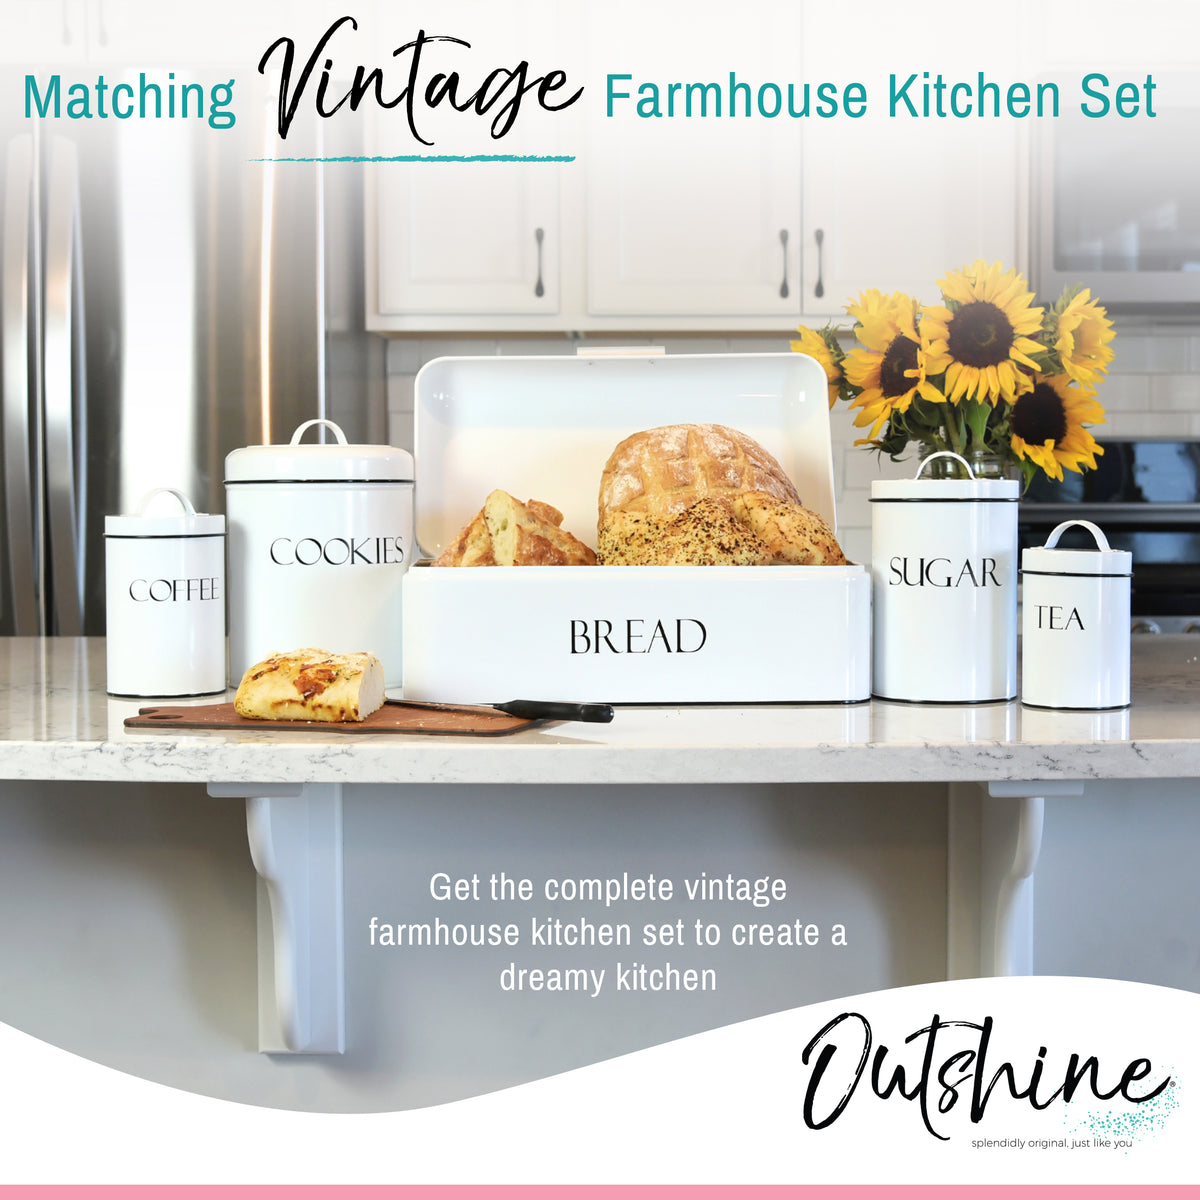 Outshine White Bread Box For Kitchen Countertop, Cutting Board Lid, White,  Small, Ceramic Bread Box And Bin : Target